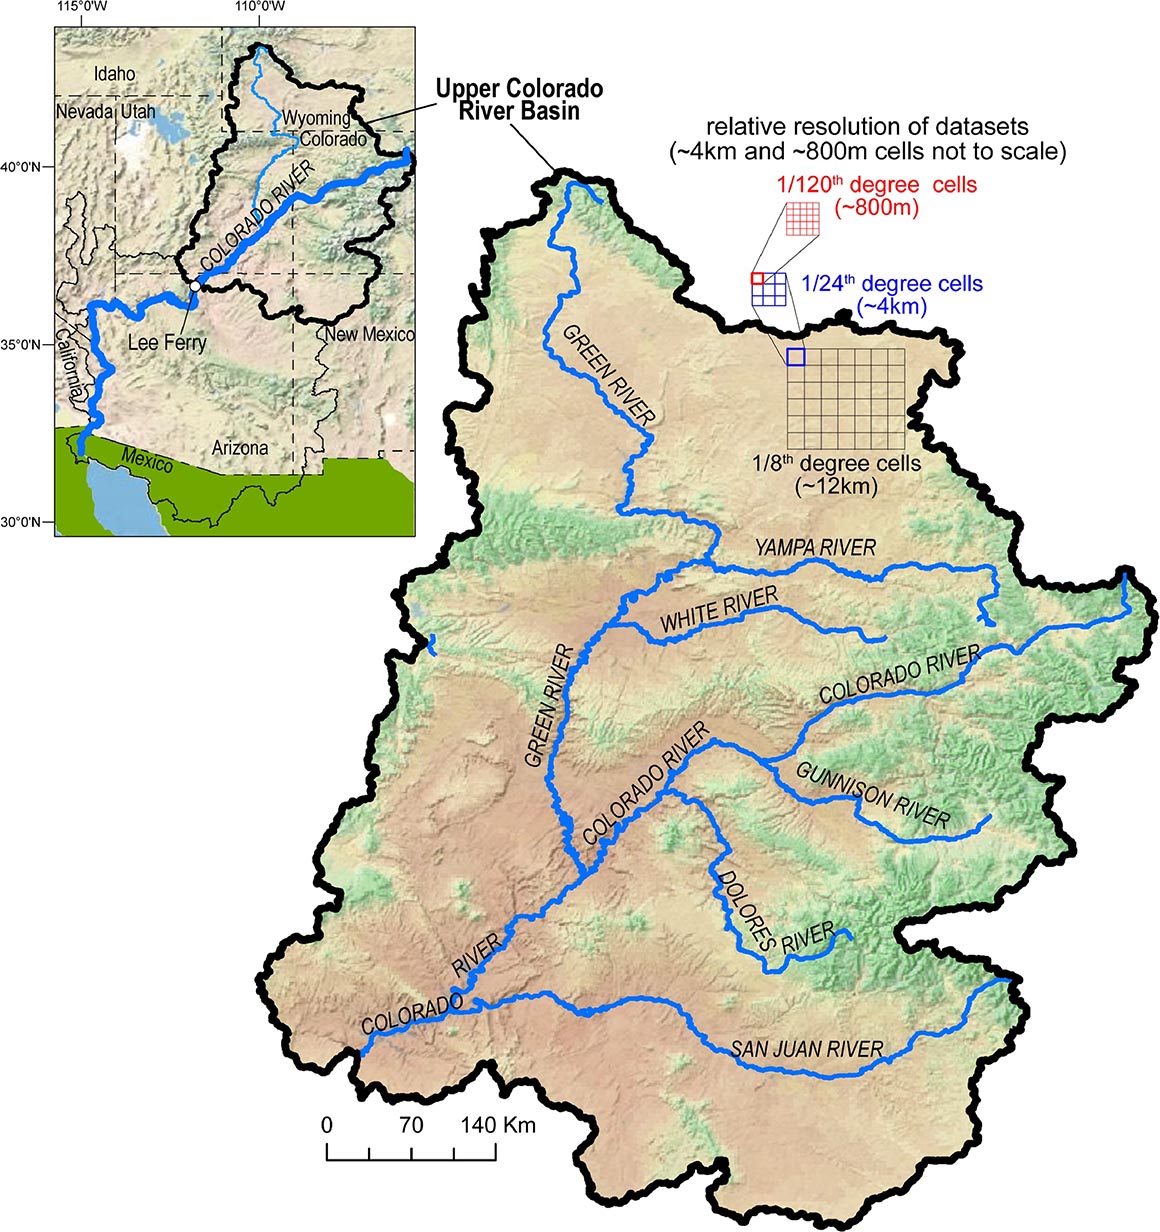  [ Map of upper Colorado River basin study area ]